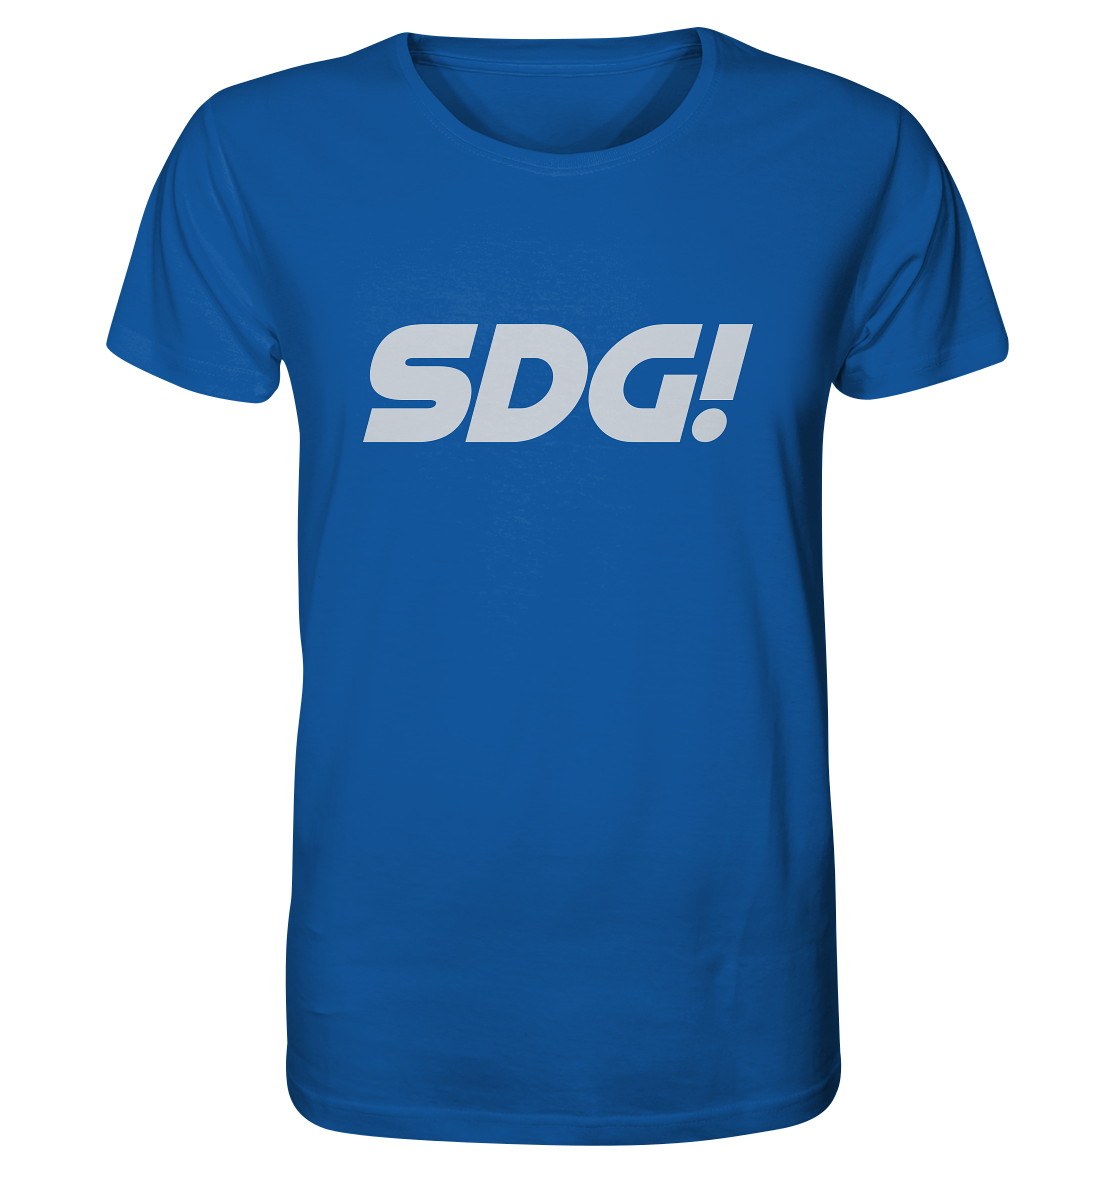 SDG! - Organic Shirt